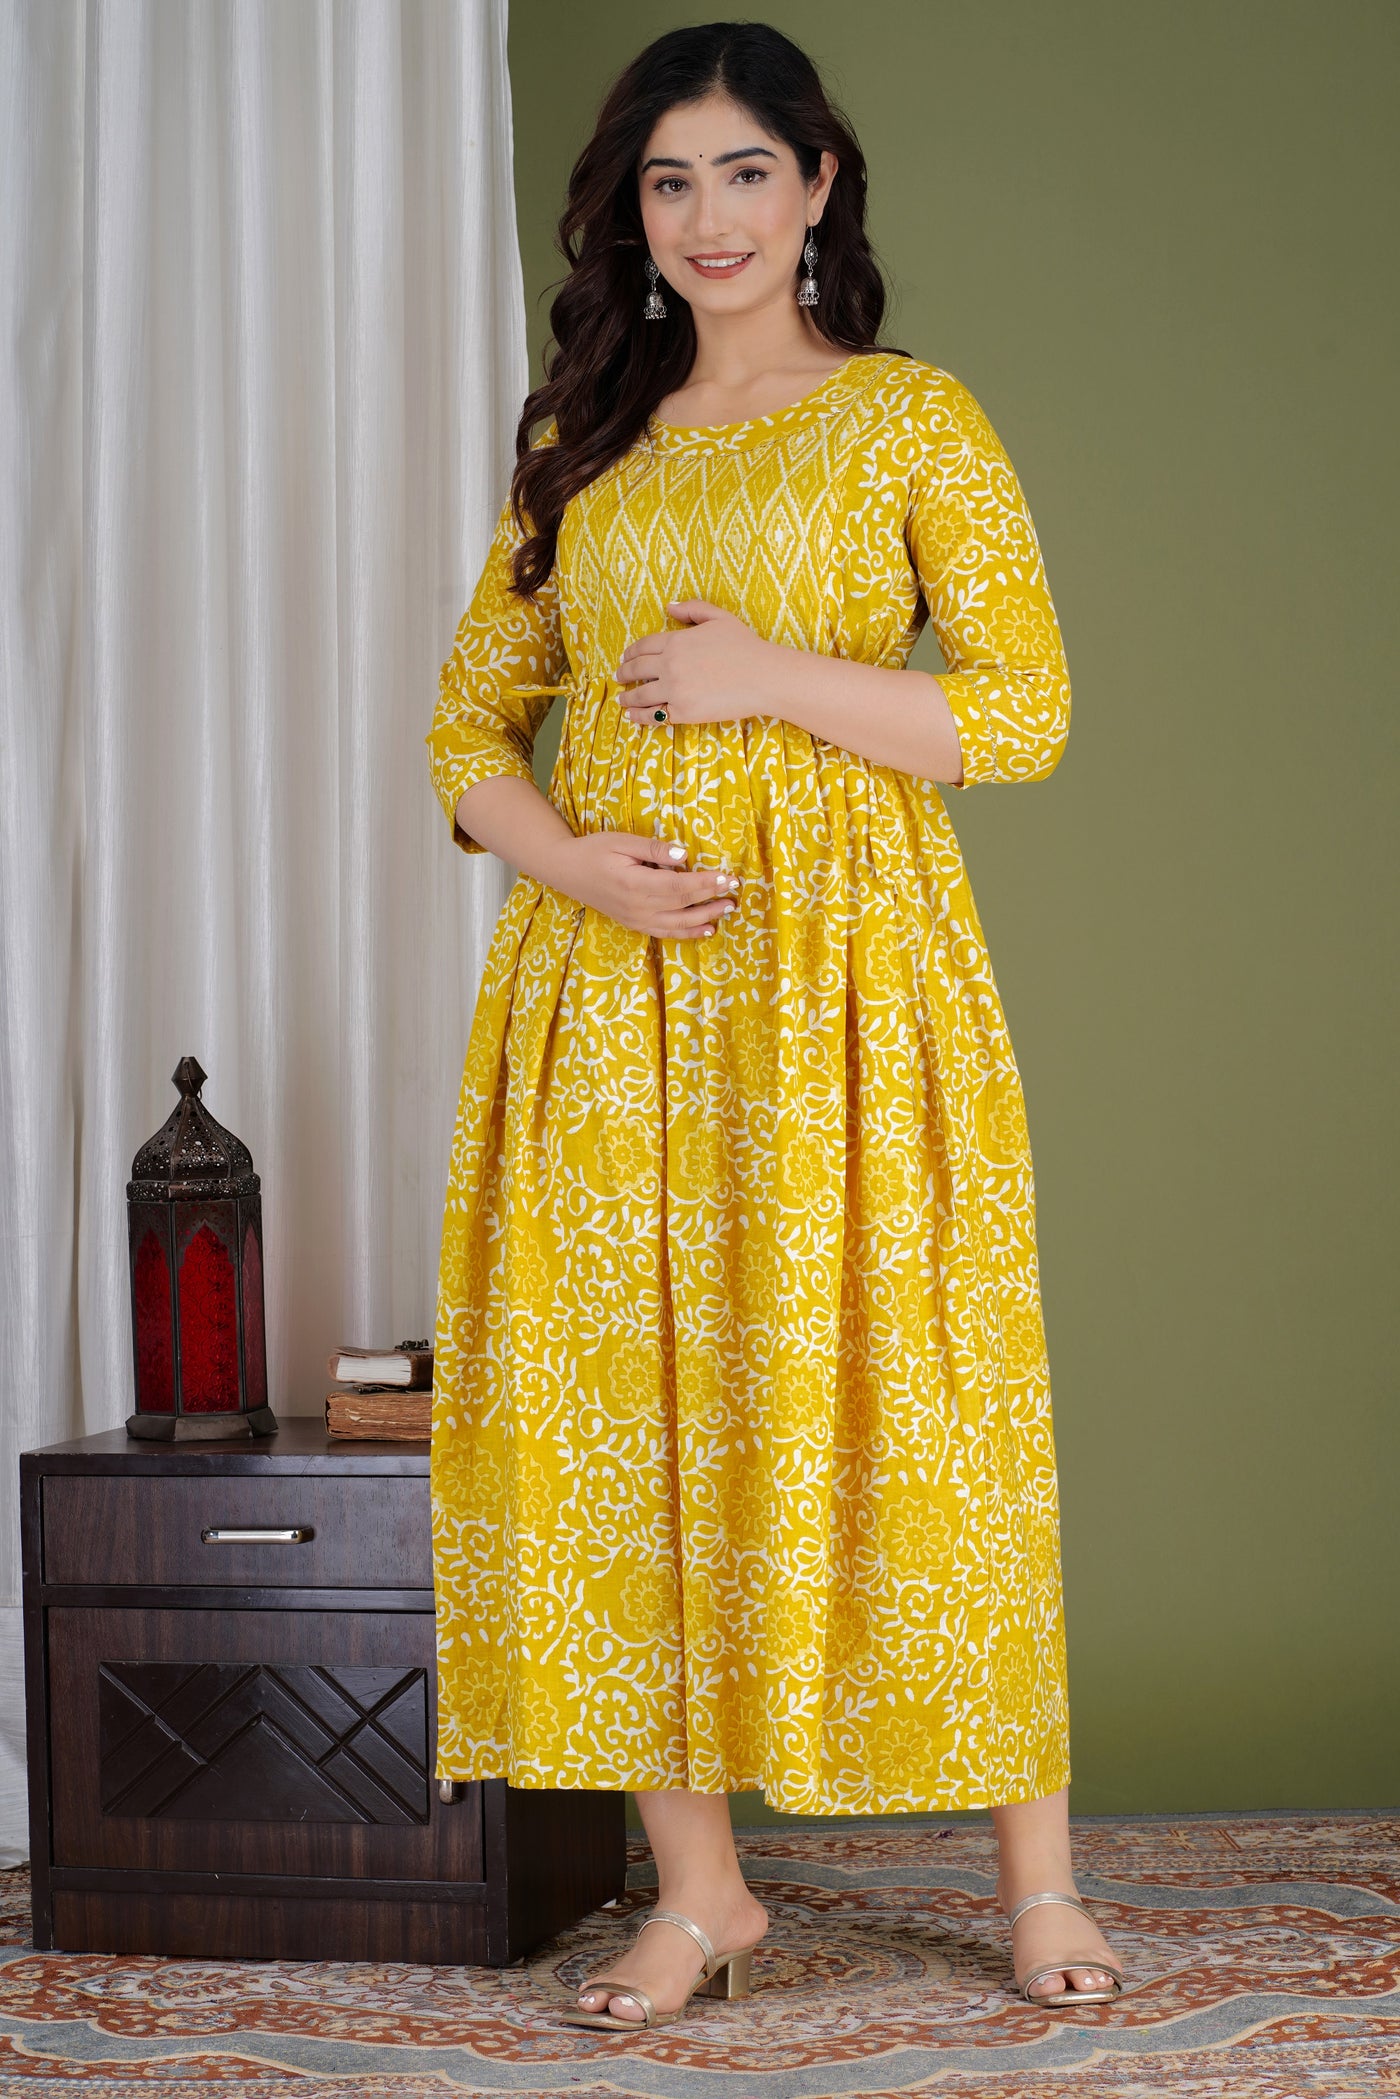 Yellow Box Yog Maternity Nursing Gown with Feeding Zip